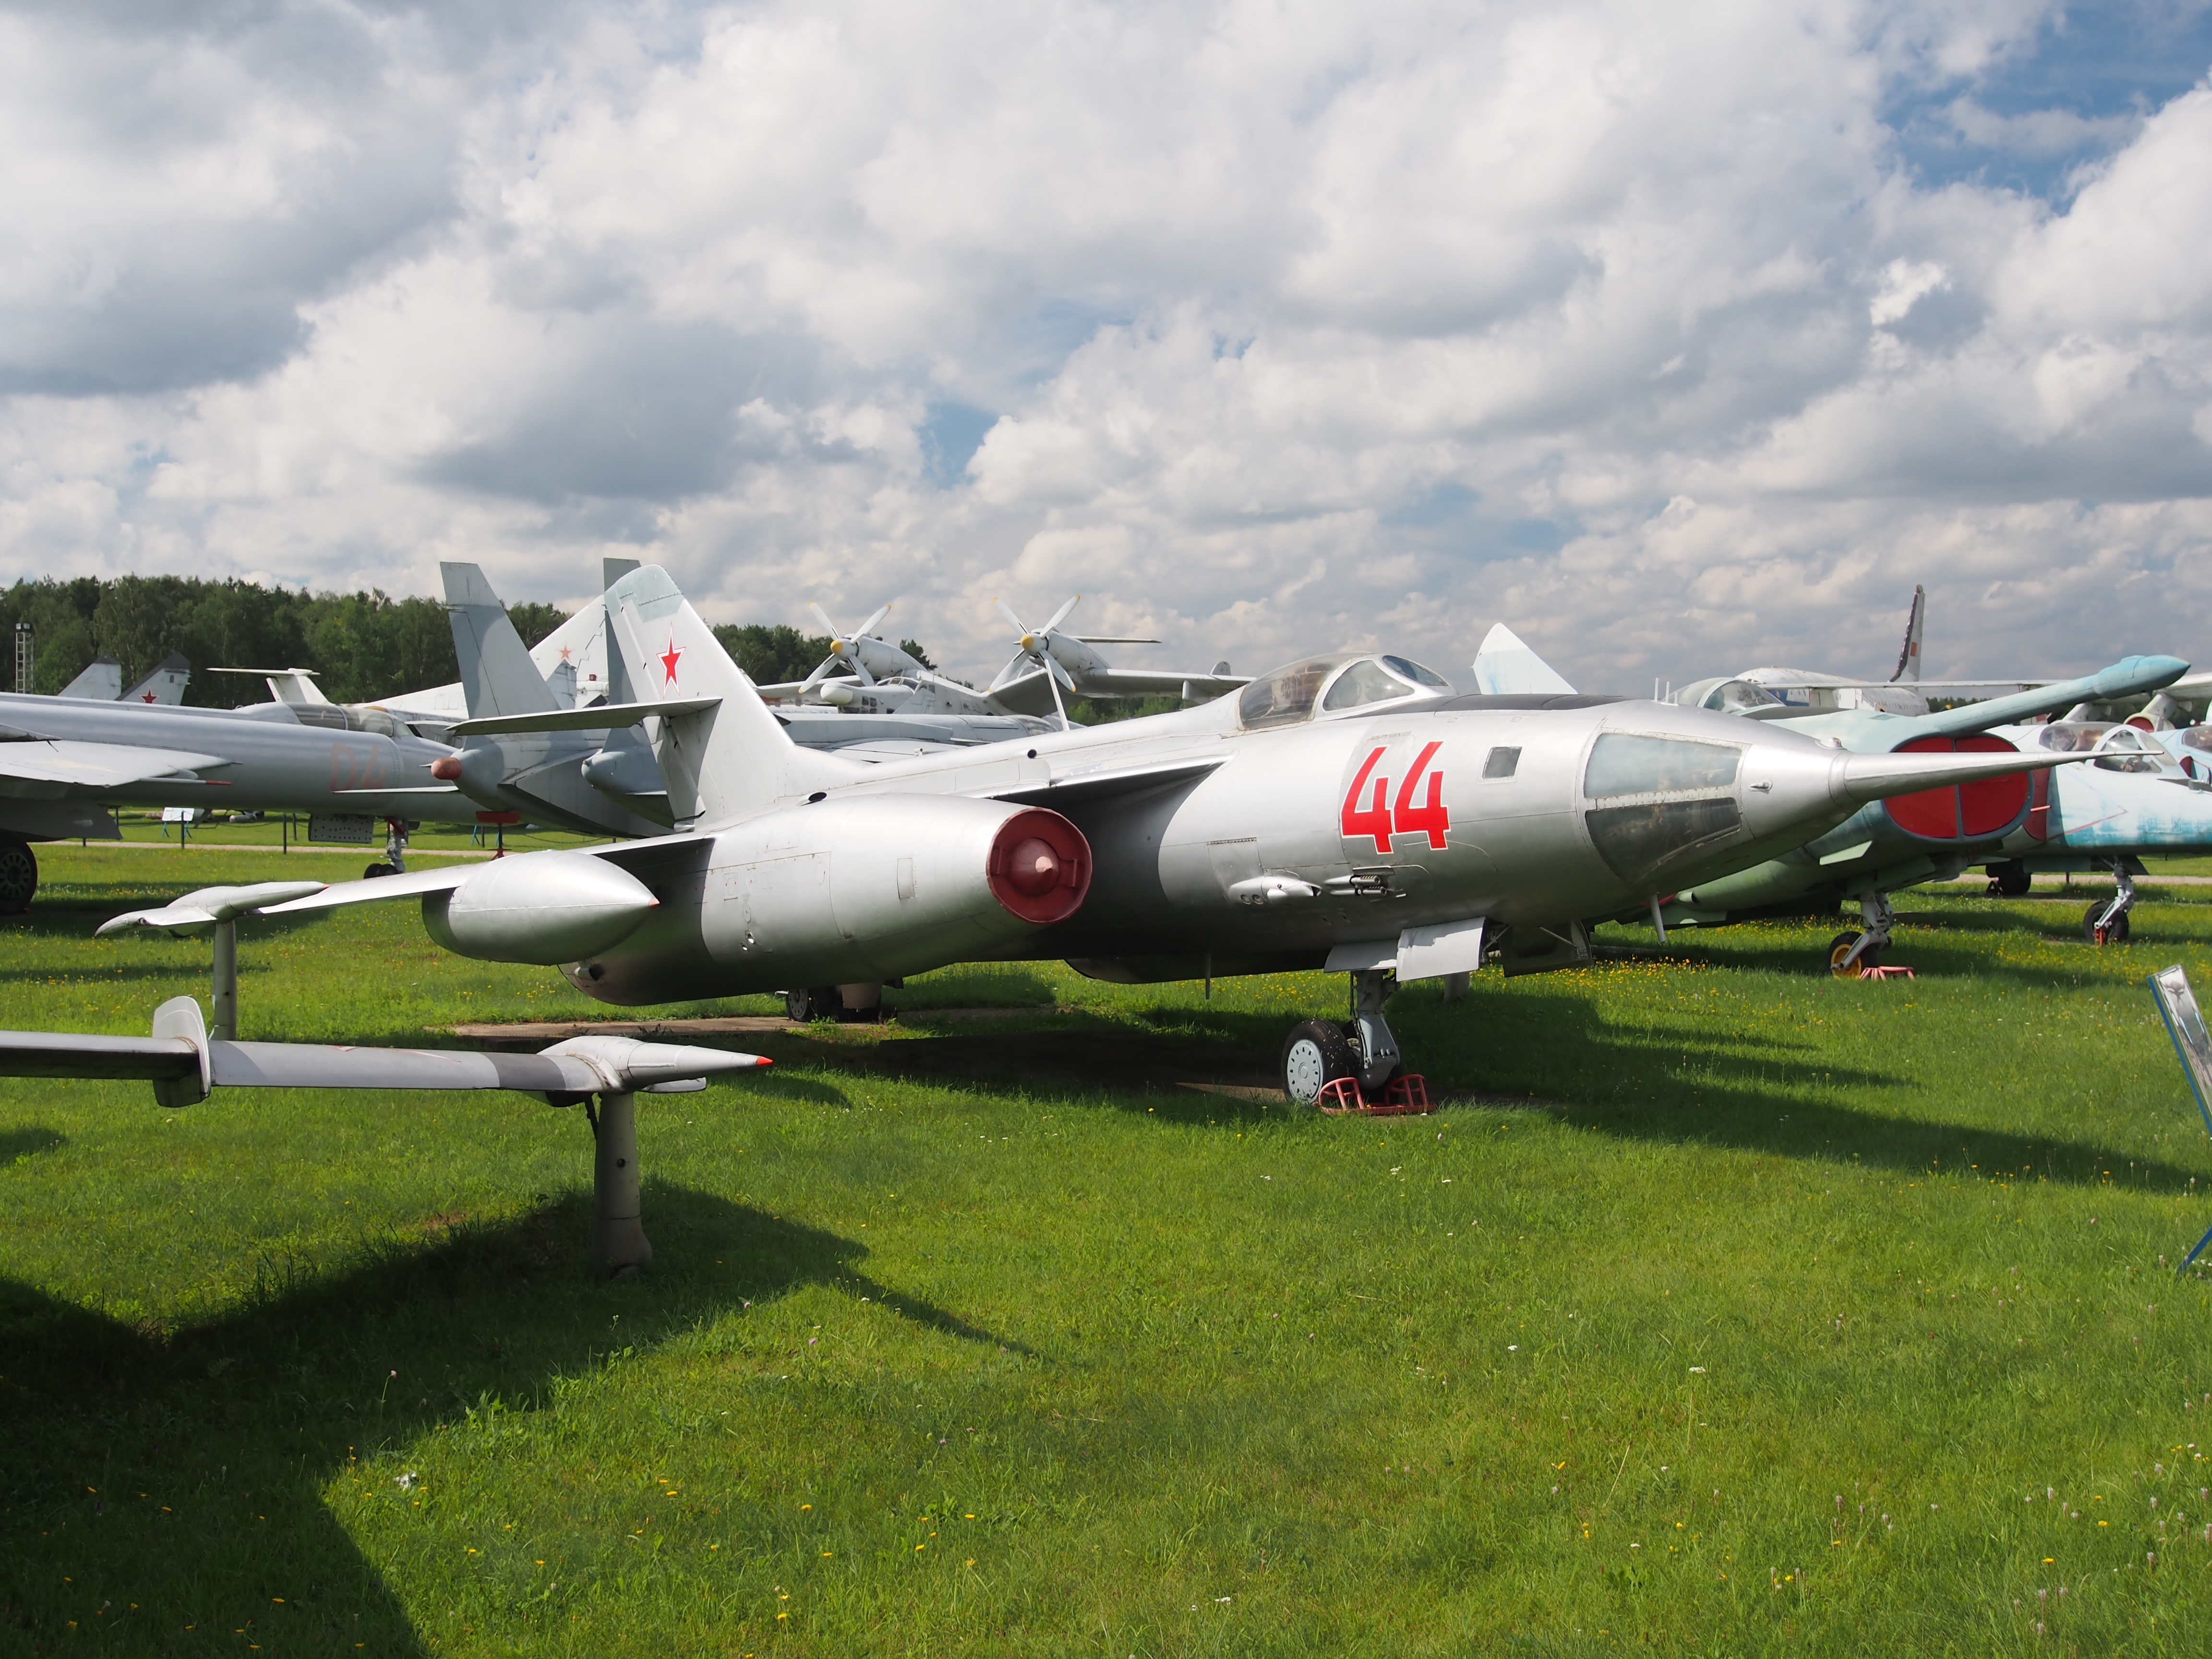 Yak-28 (航空機) - Wikipedia